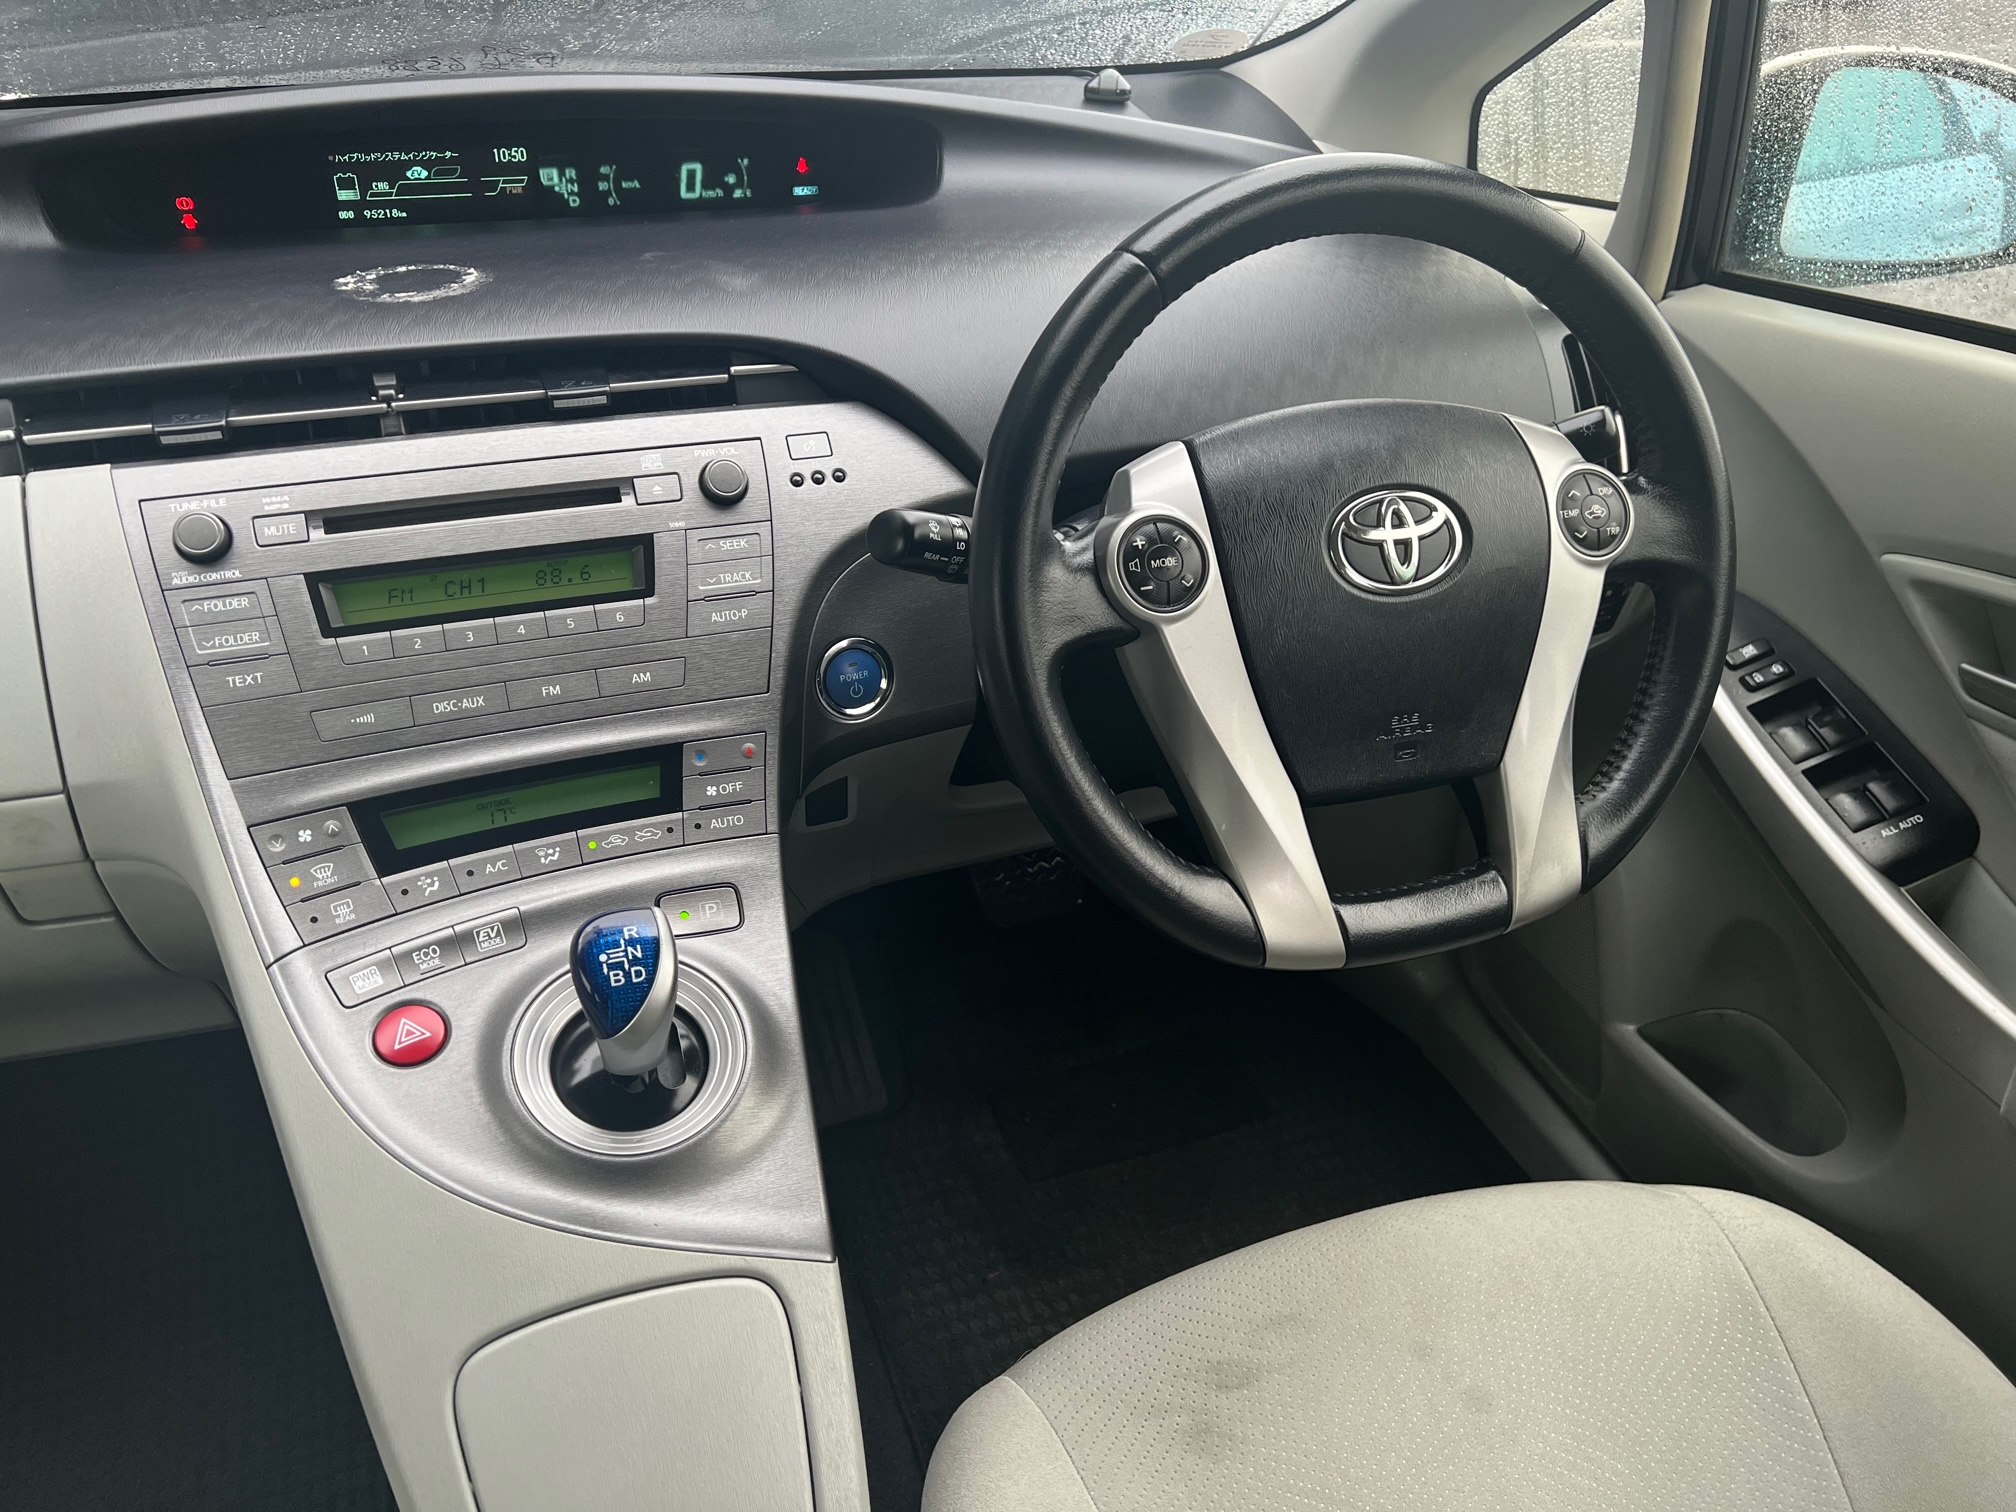 Toyota Prius 2014 Image 13